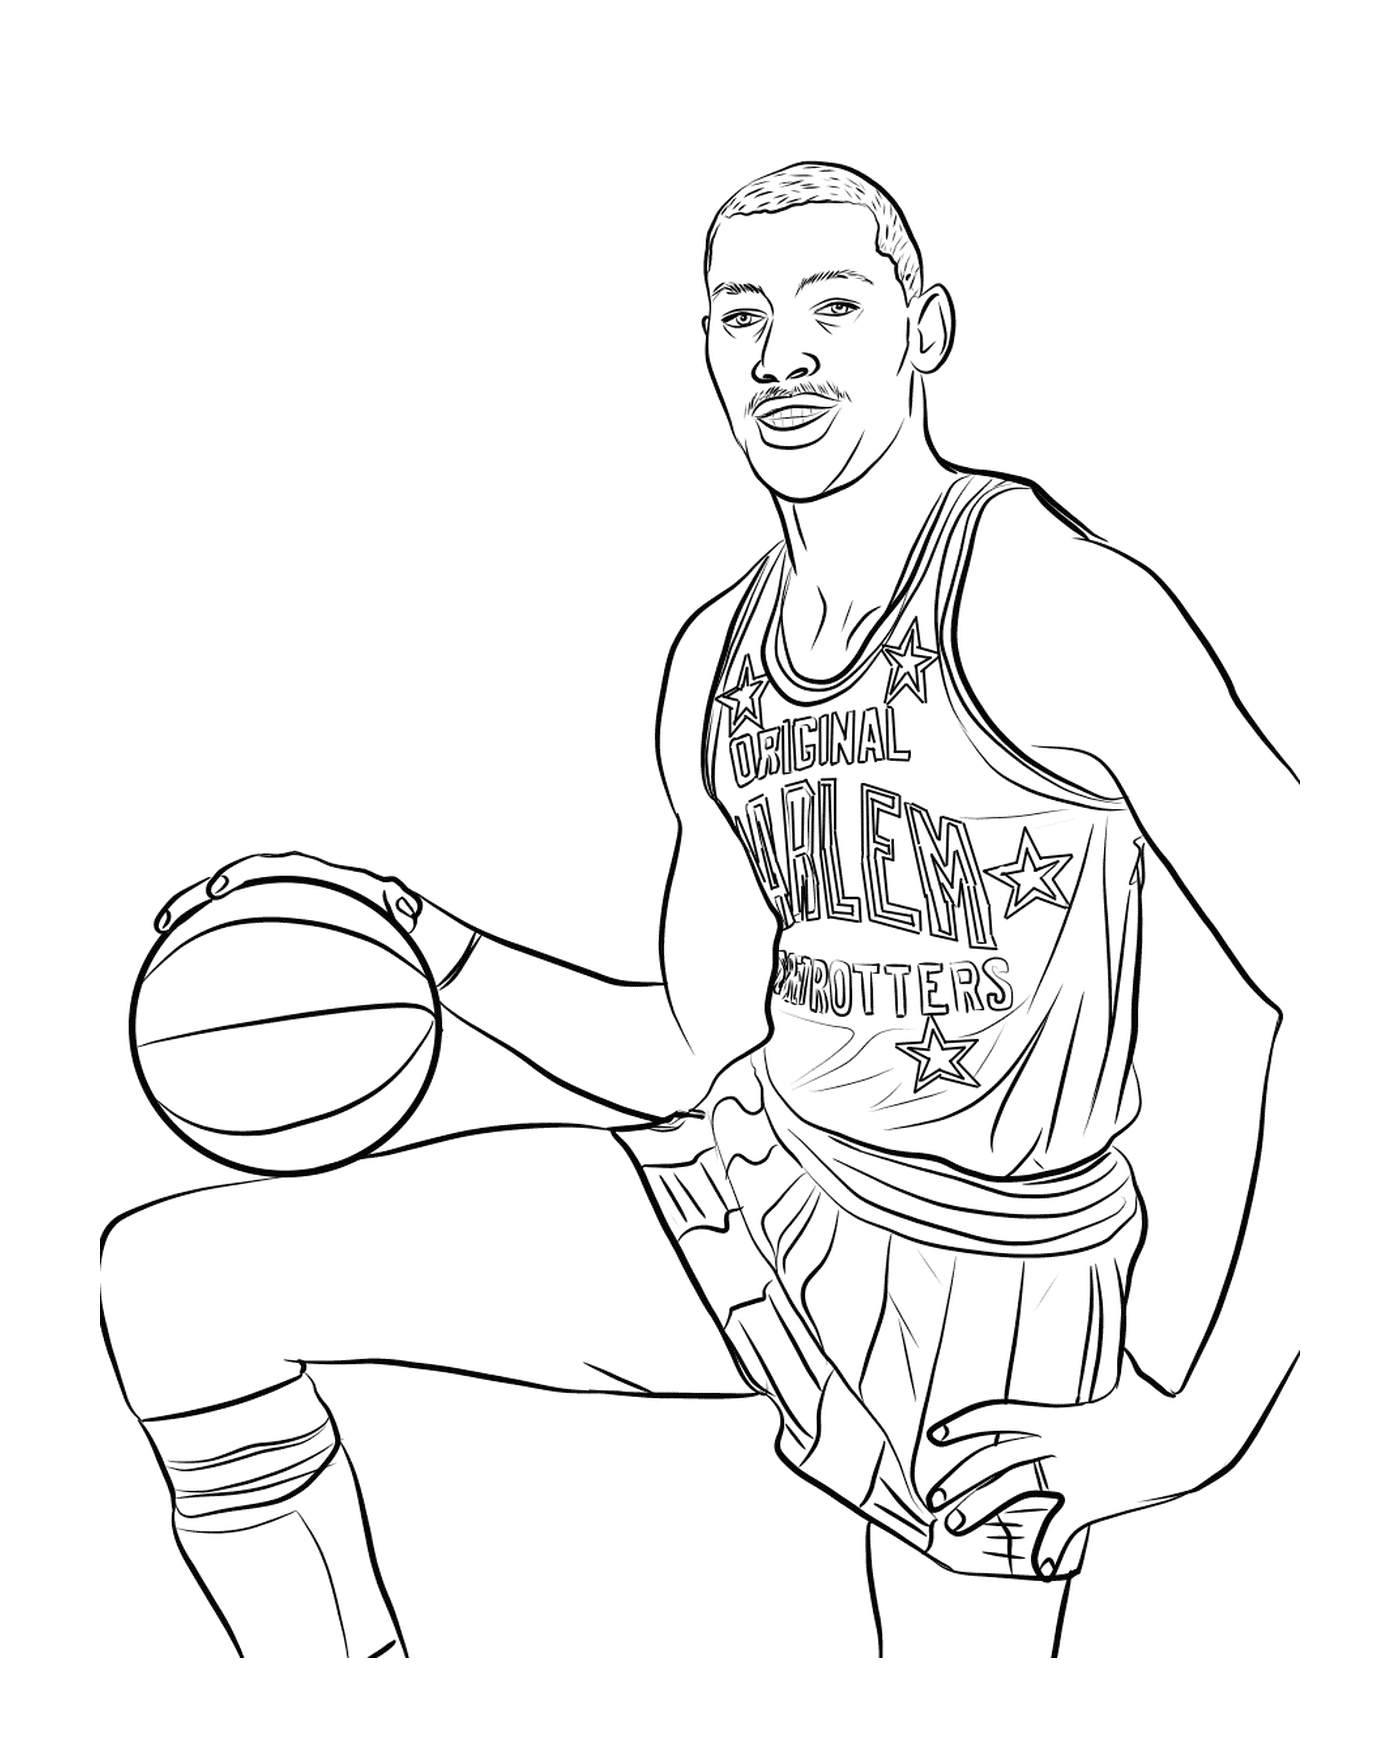   Wilt Chamberlain, joueur de basket 